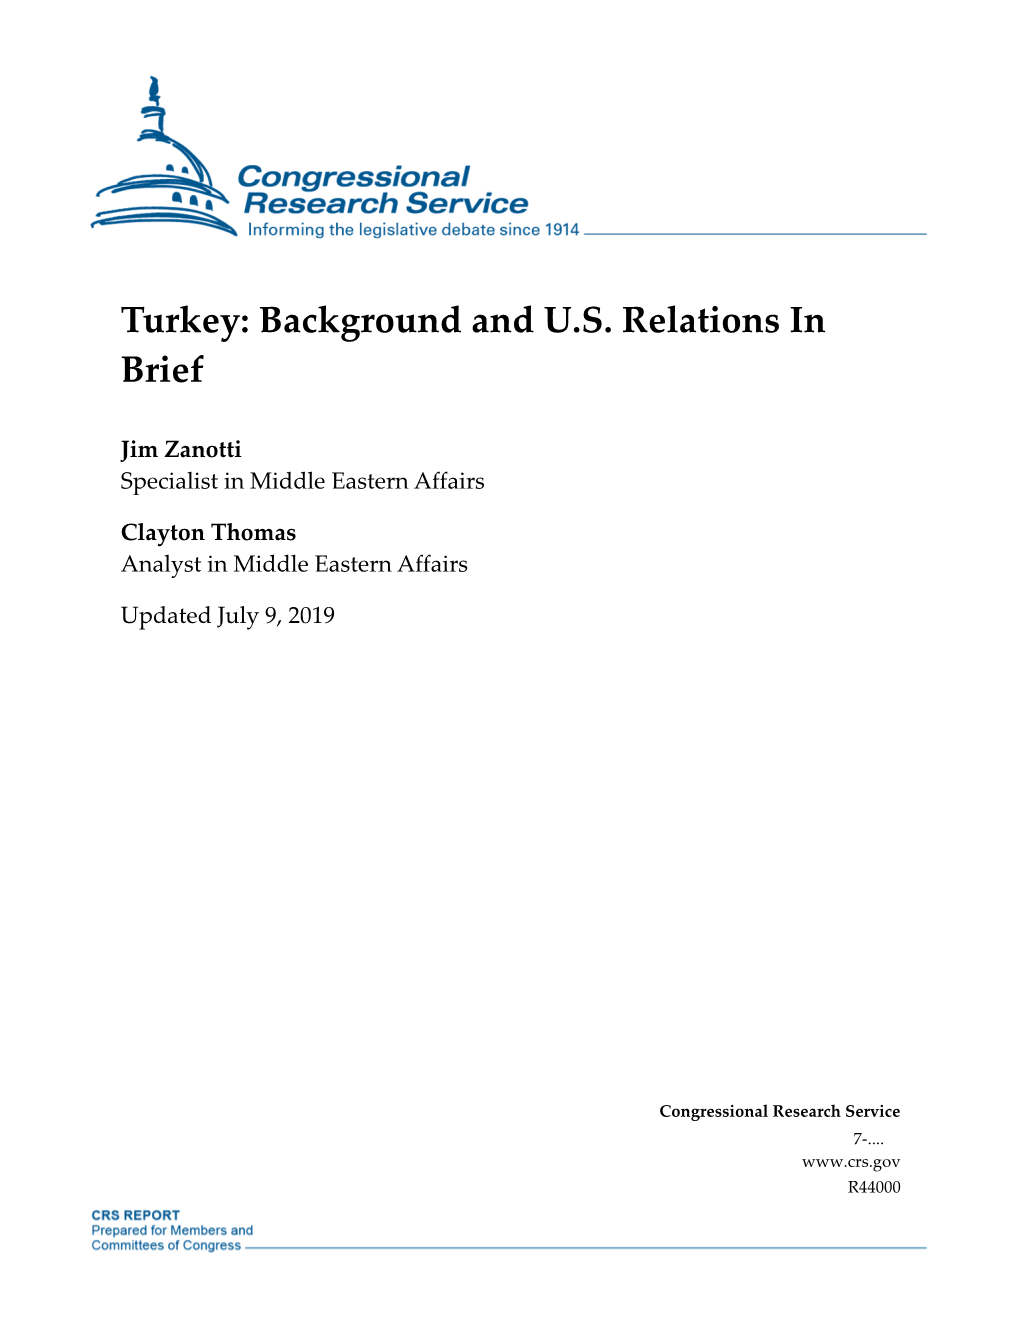 Turkey: Background and U.S. Relations in Brief